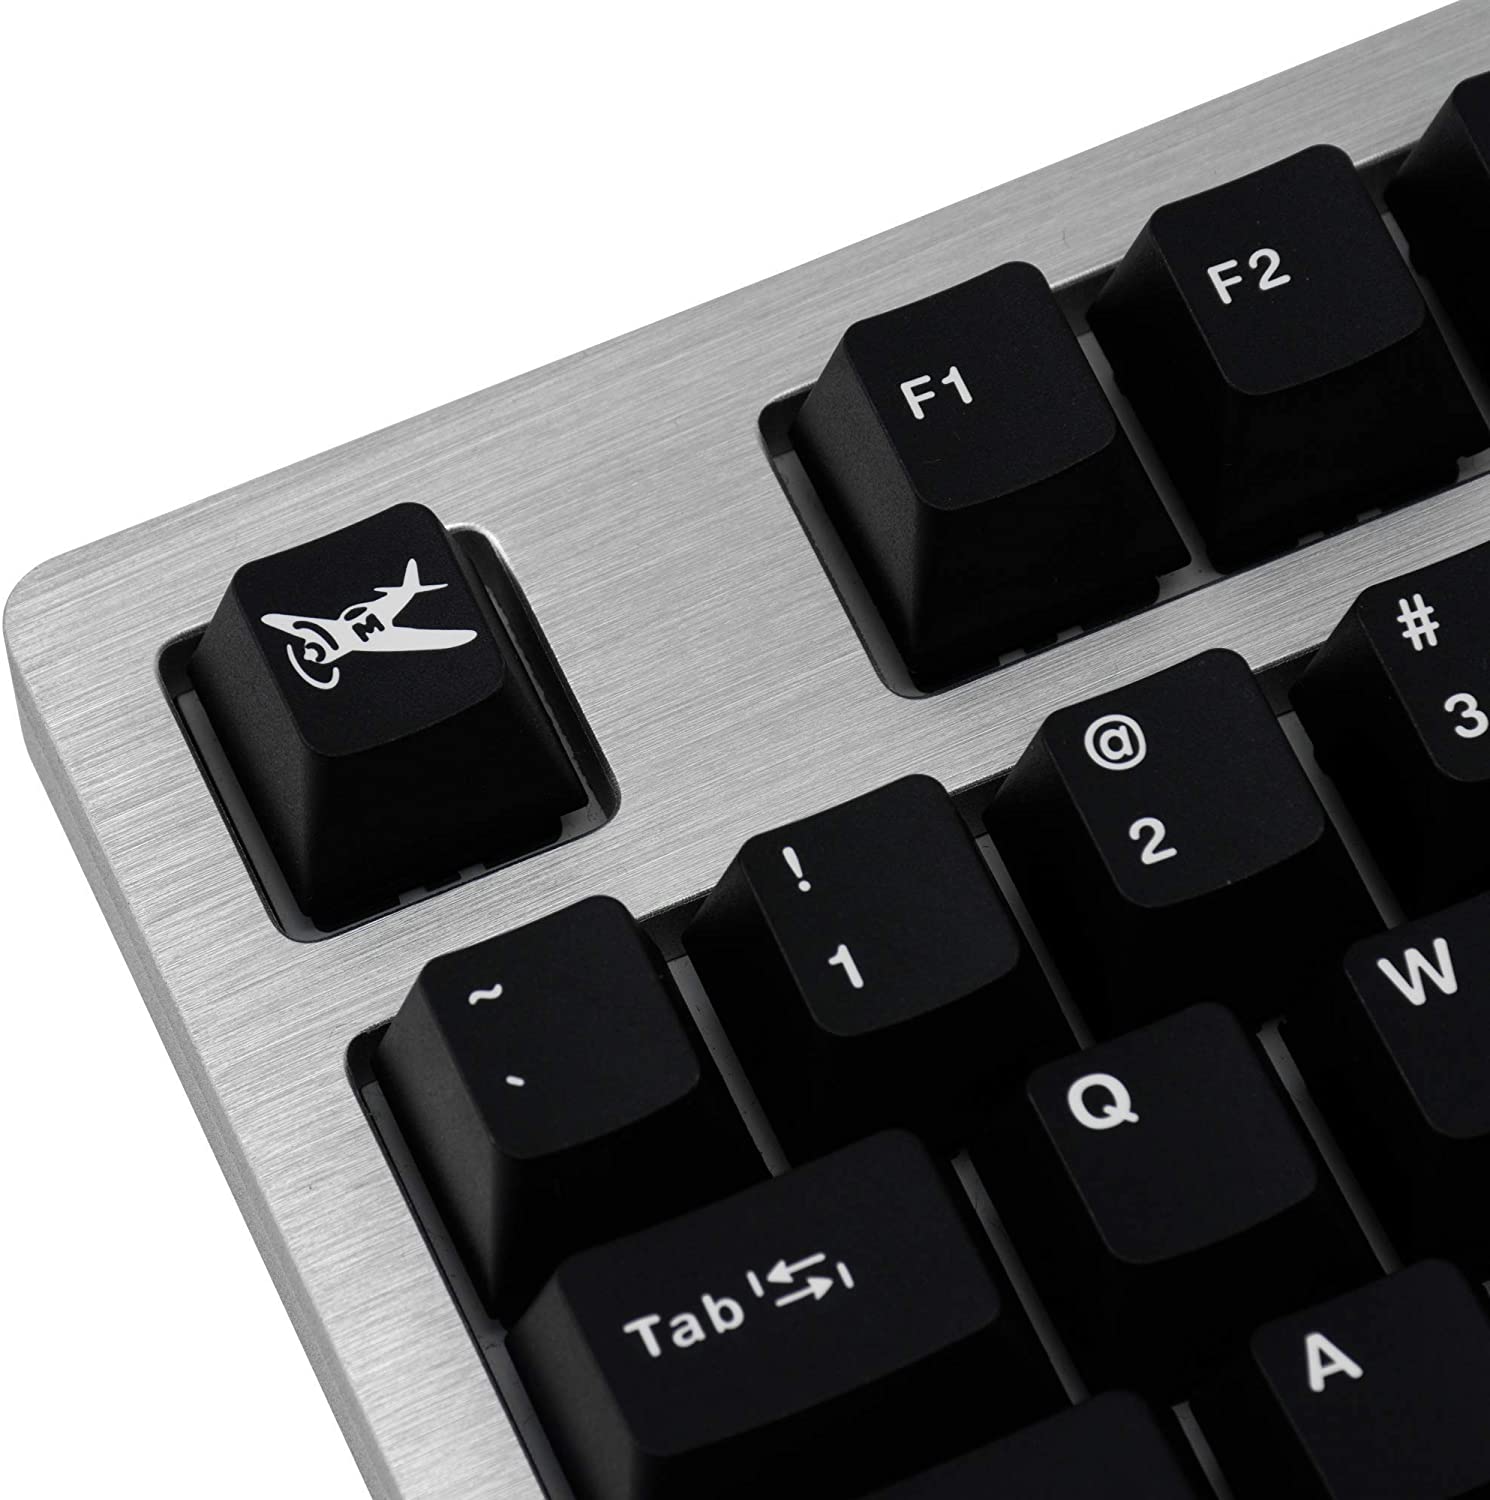 Mistel Doubleshot PBT OEM Profile Mechanical Keyboard Keycaps White on Black MKUJSNG19Z |27359|